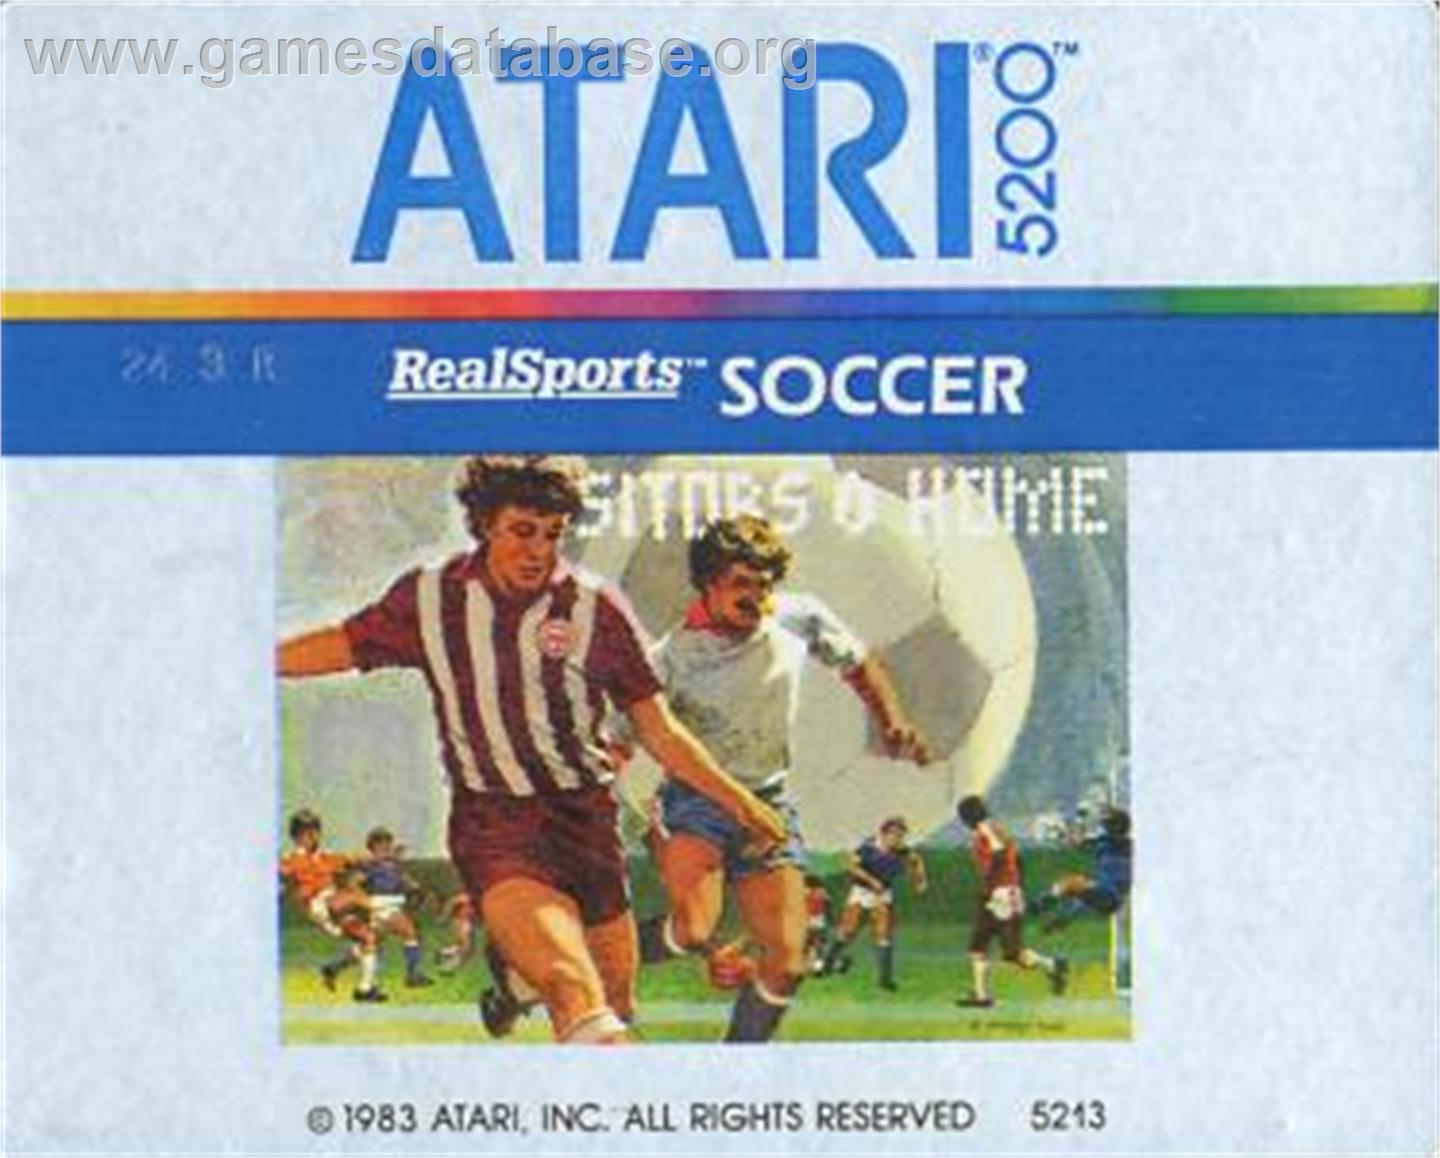 RealSports Soccer - Atari 5200 - Artwork - Cartridge Top